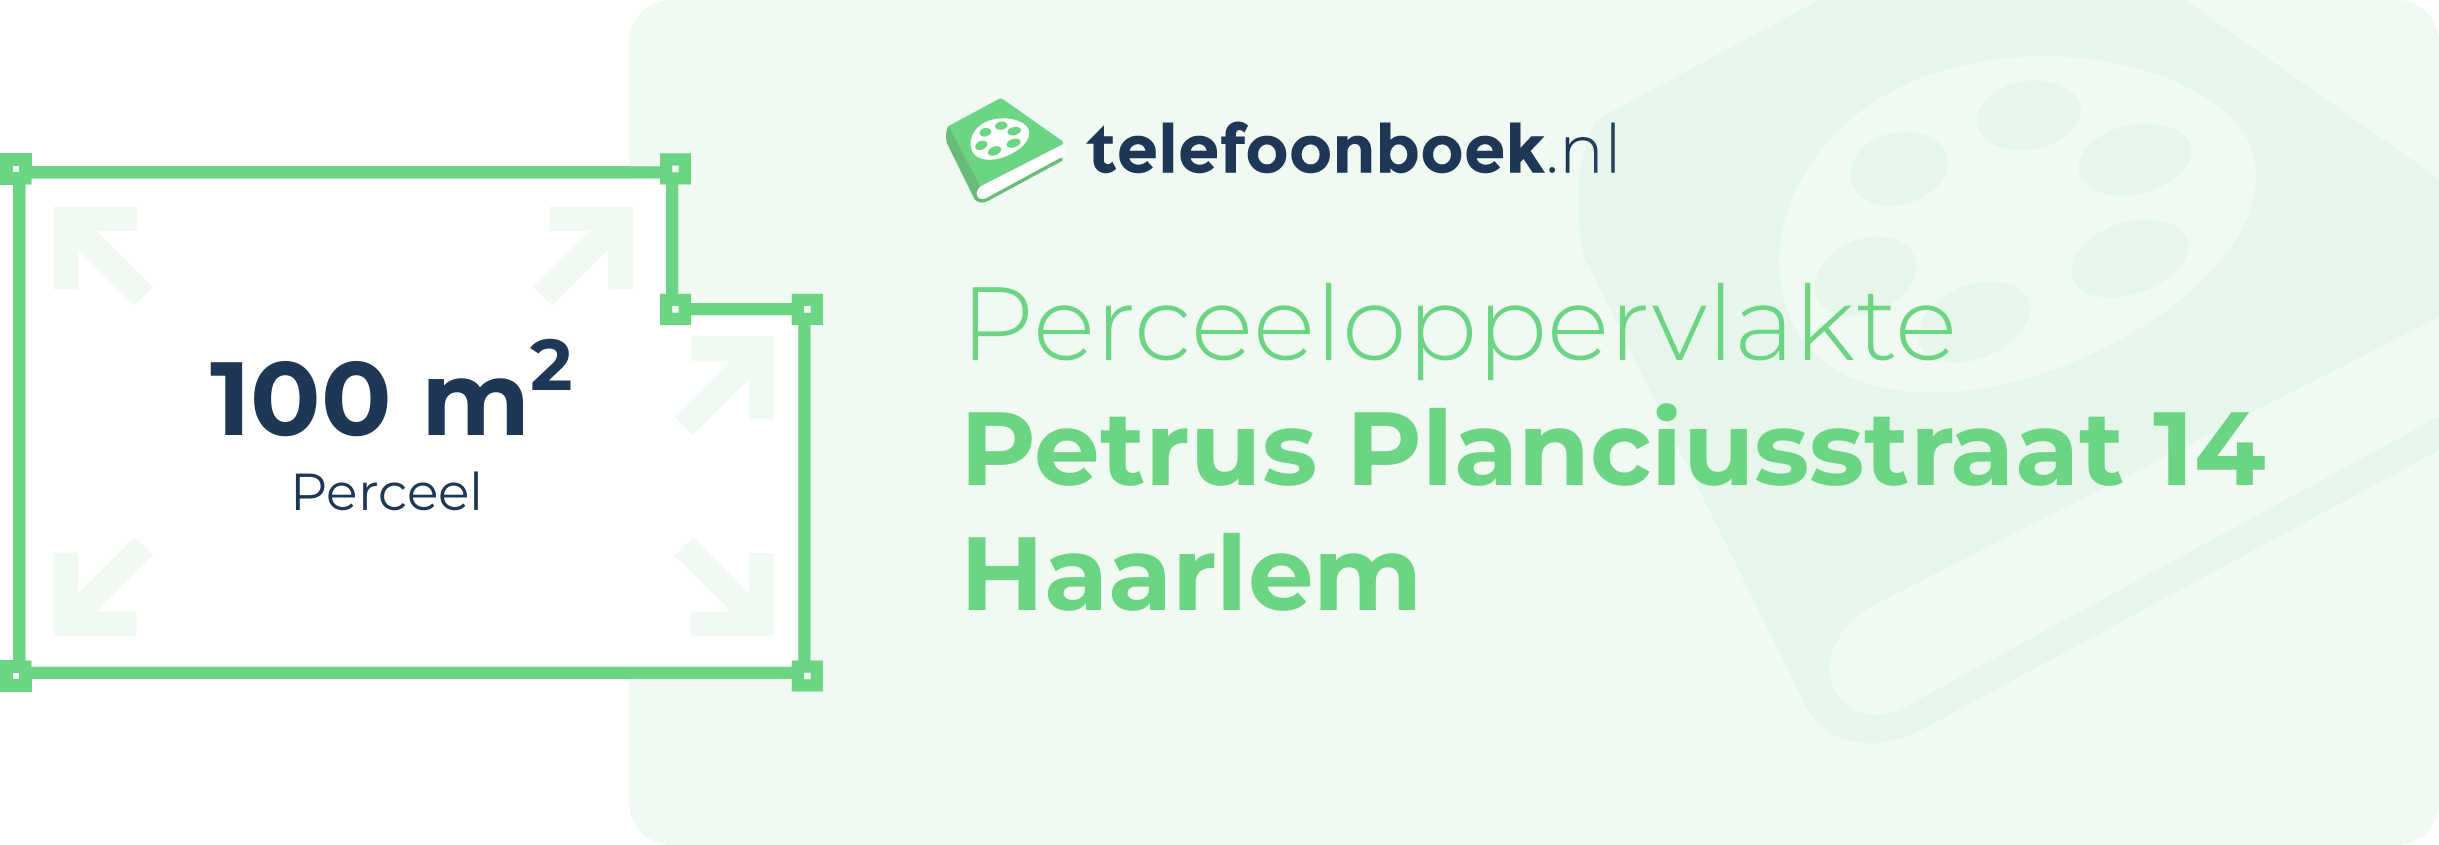 Perceeloppervlakte Petrus Planciusstraat 14 Haarlem